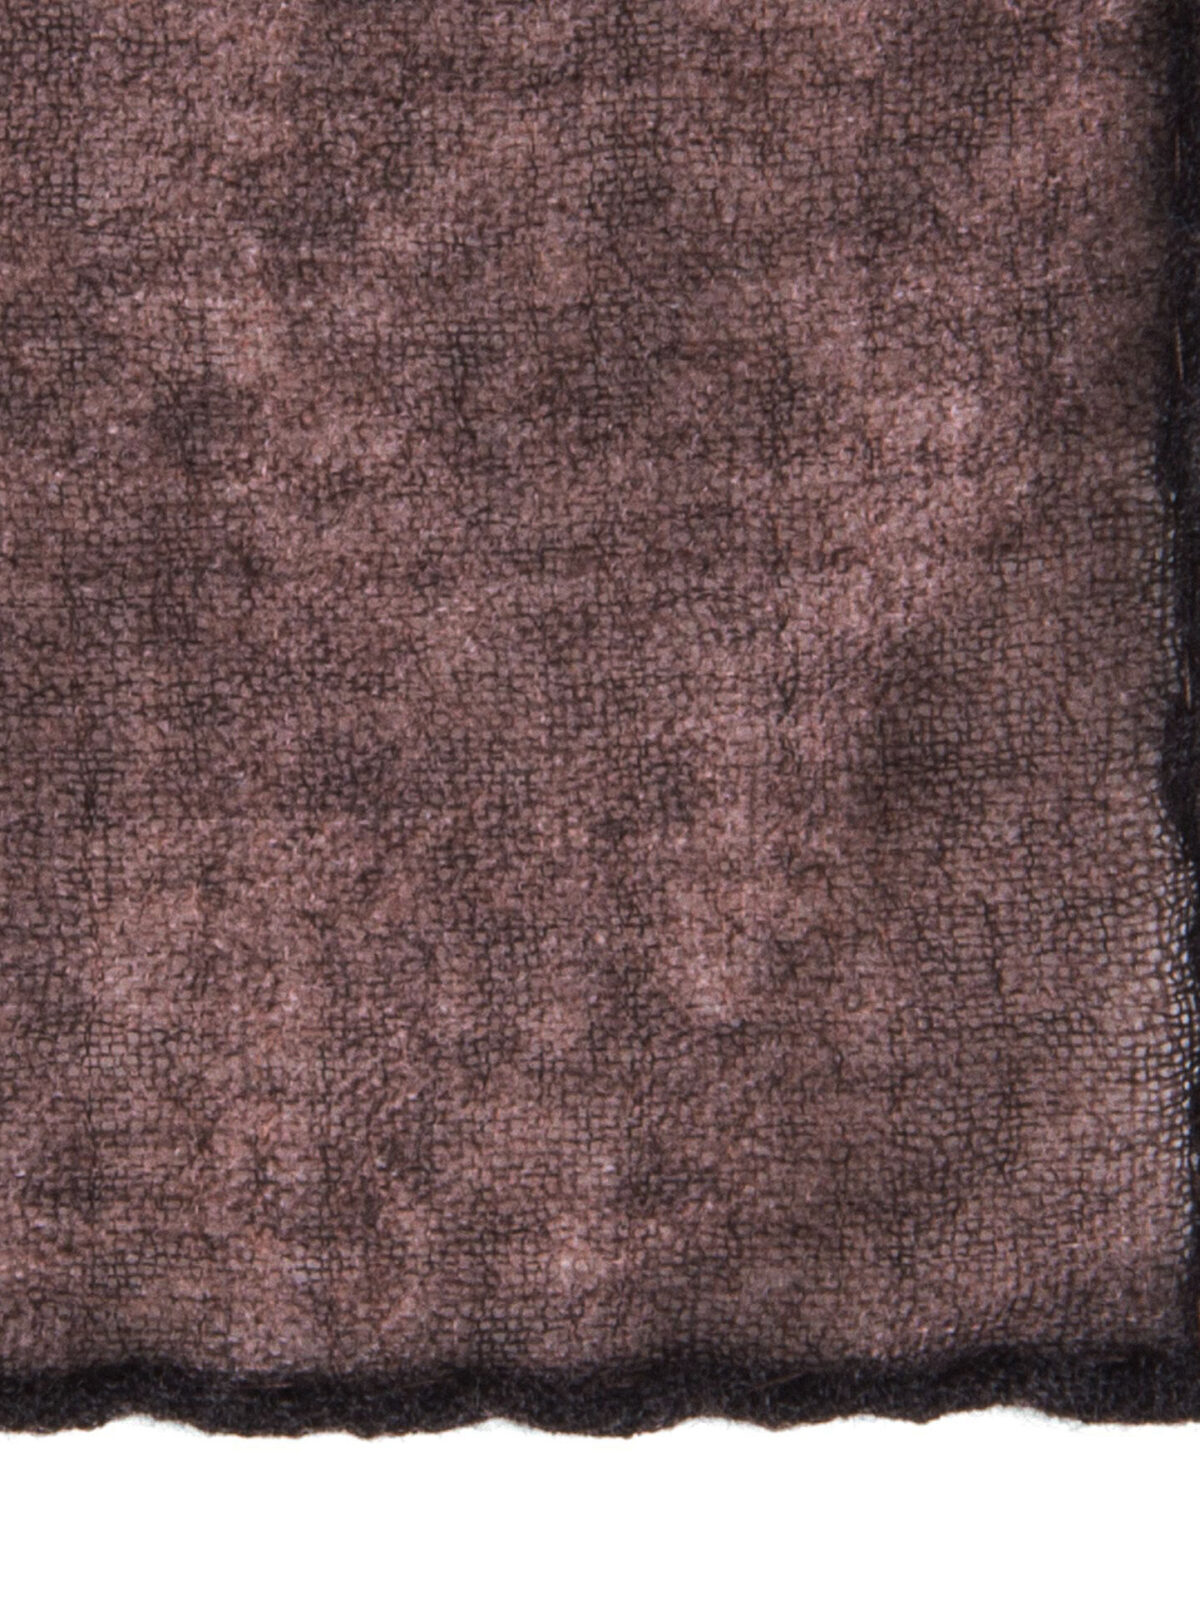 Chestnut Wool Pocket Square